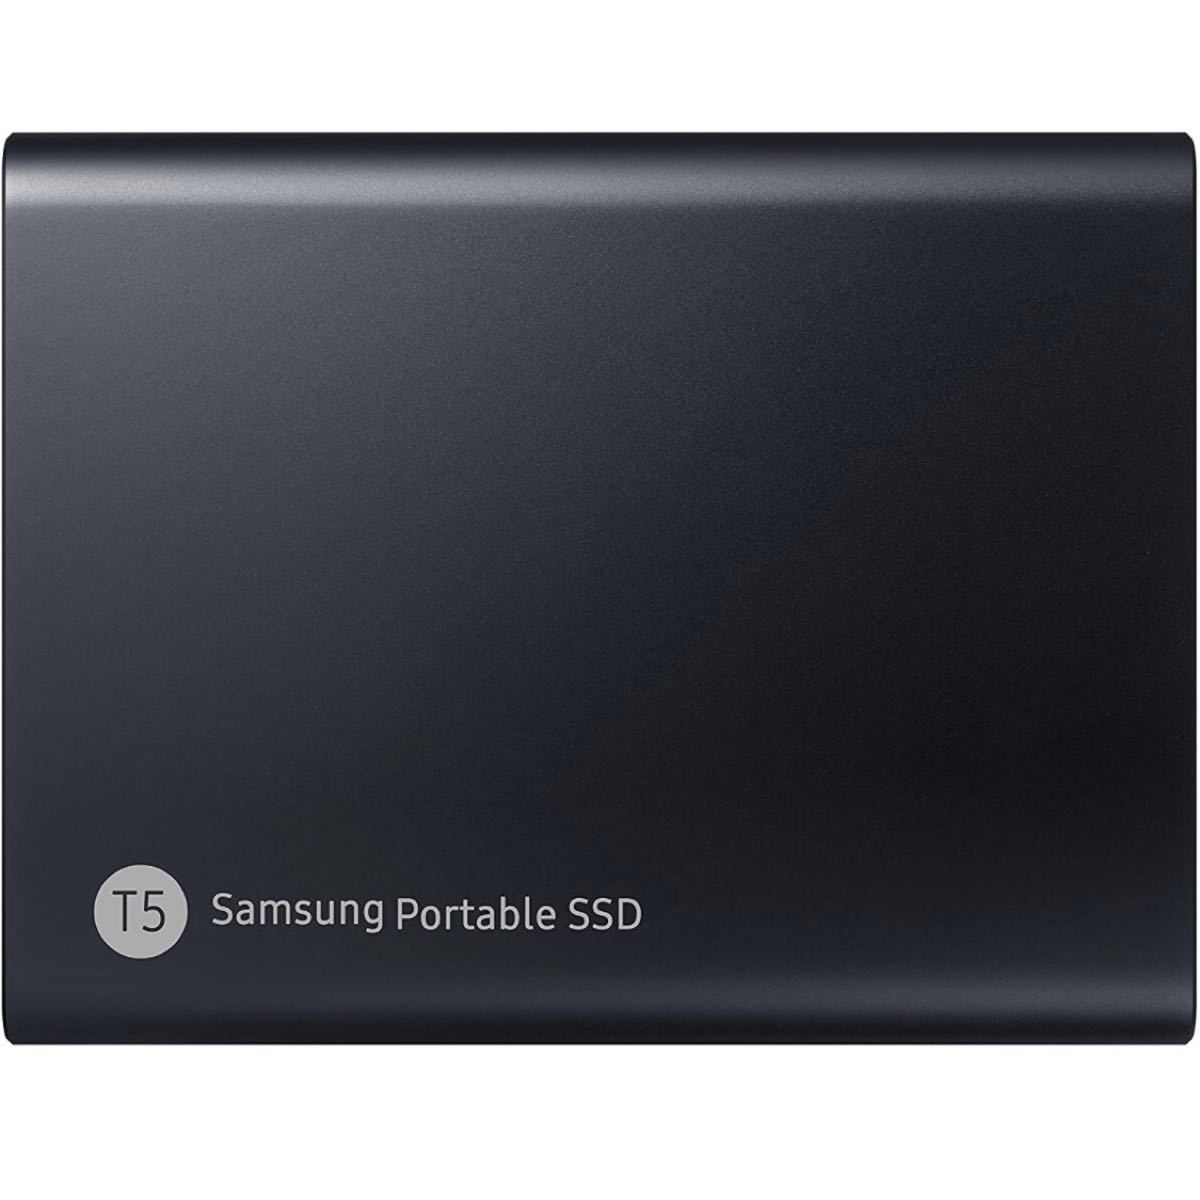 【新品】Samsung 外付けSSD T5 2TB USB3.1 【国内正規品】 MU-PA2T0B/IT portable 高速